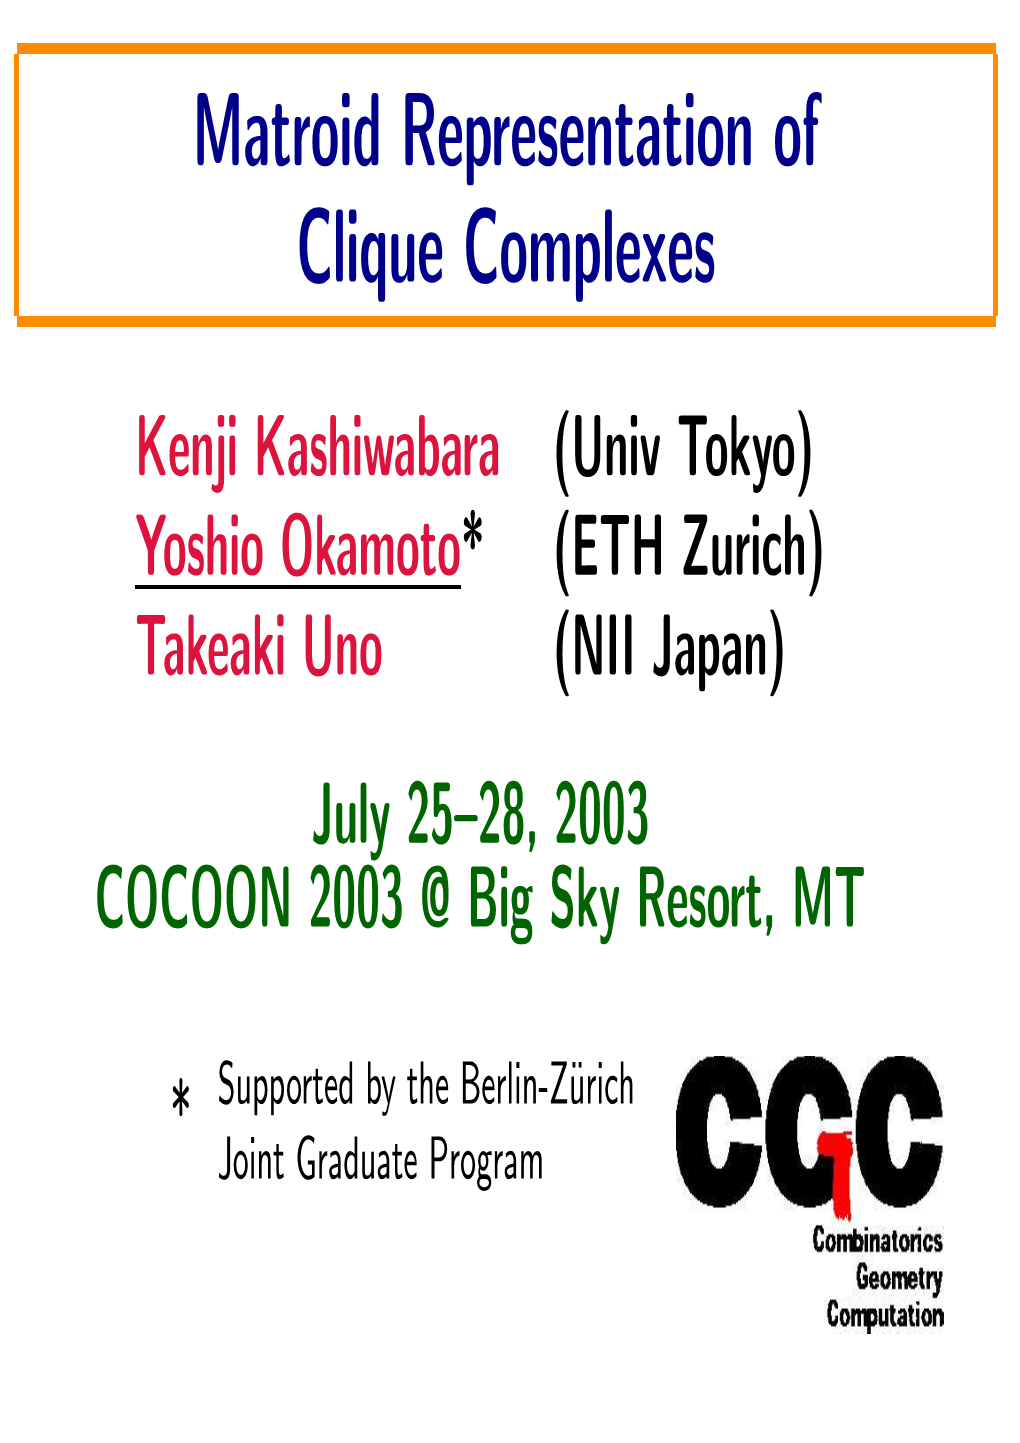 Matroid Representation of Clique Complexes